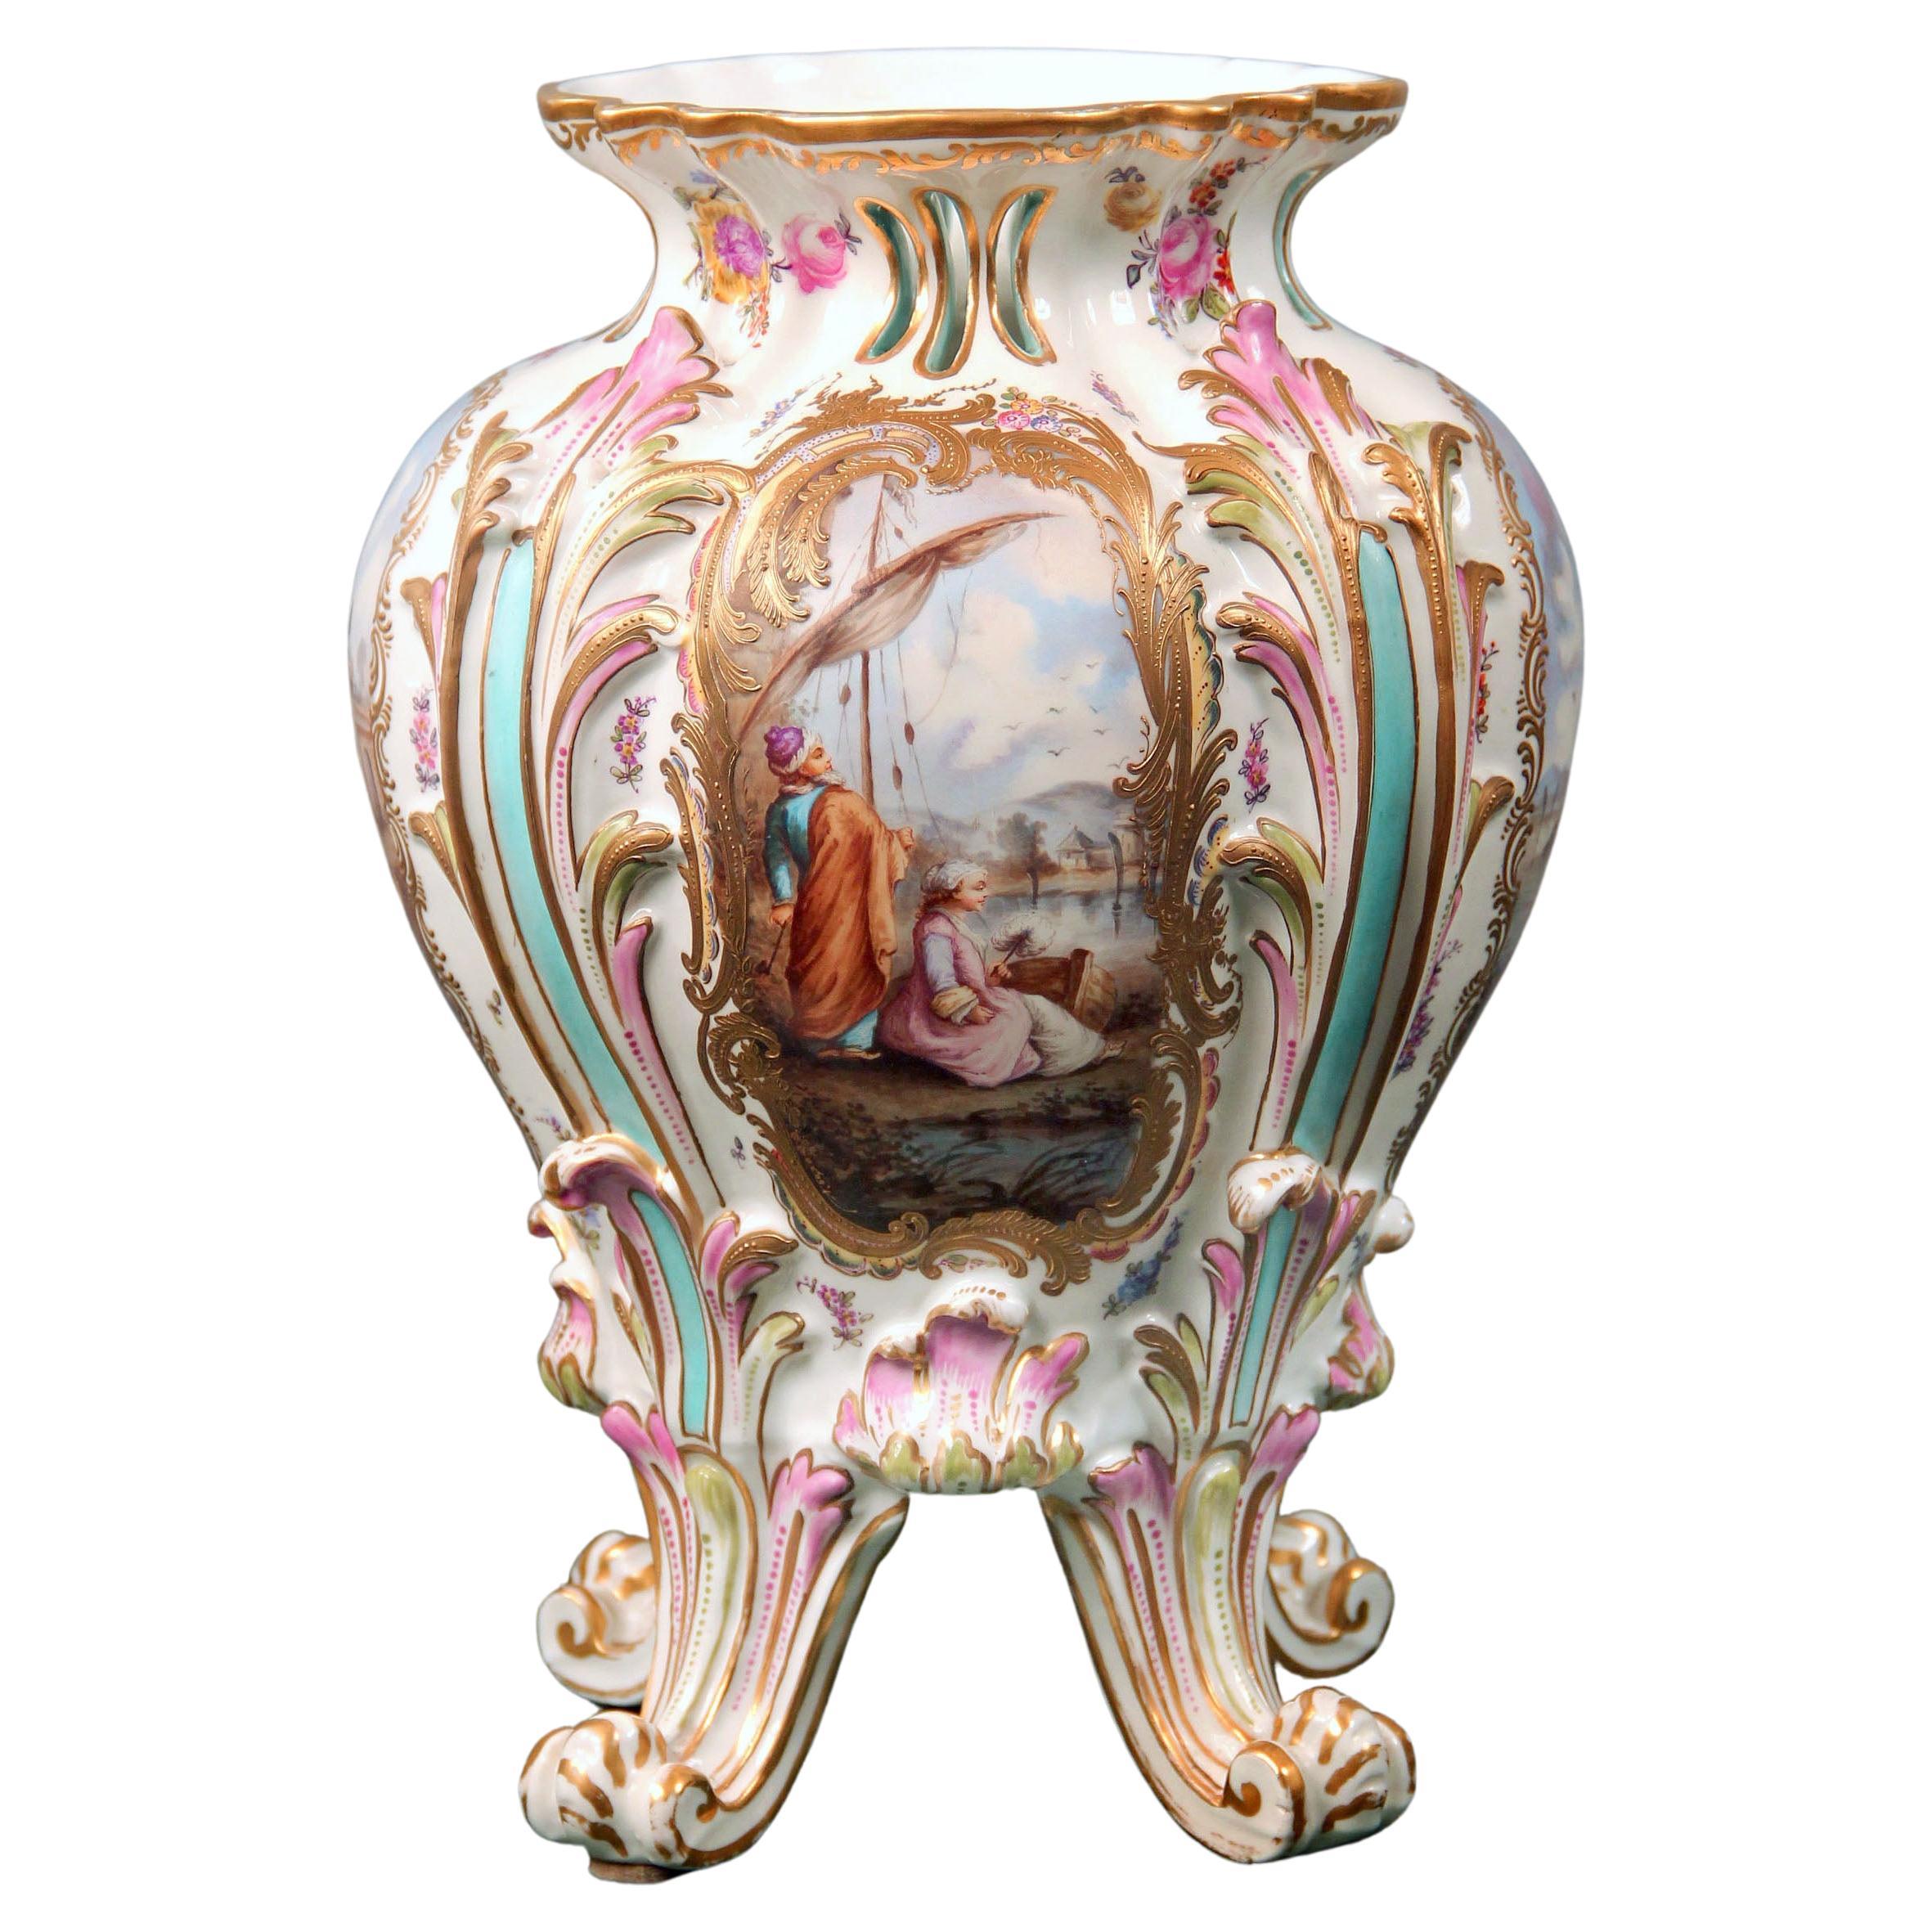 A Pretty Late 19th Century German Porcelain Vase